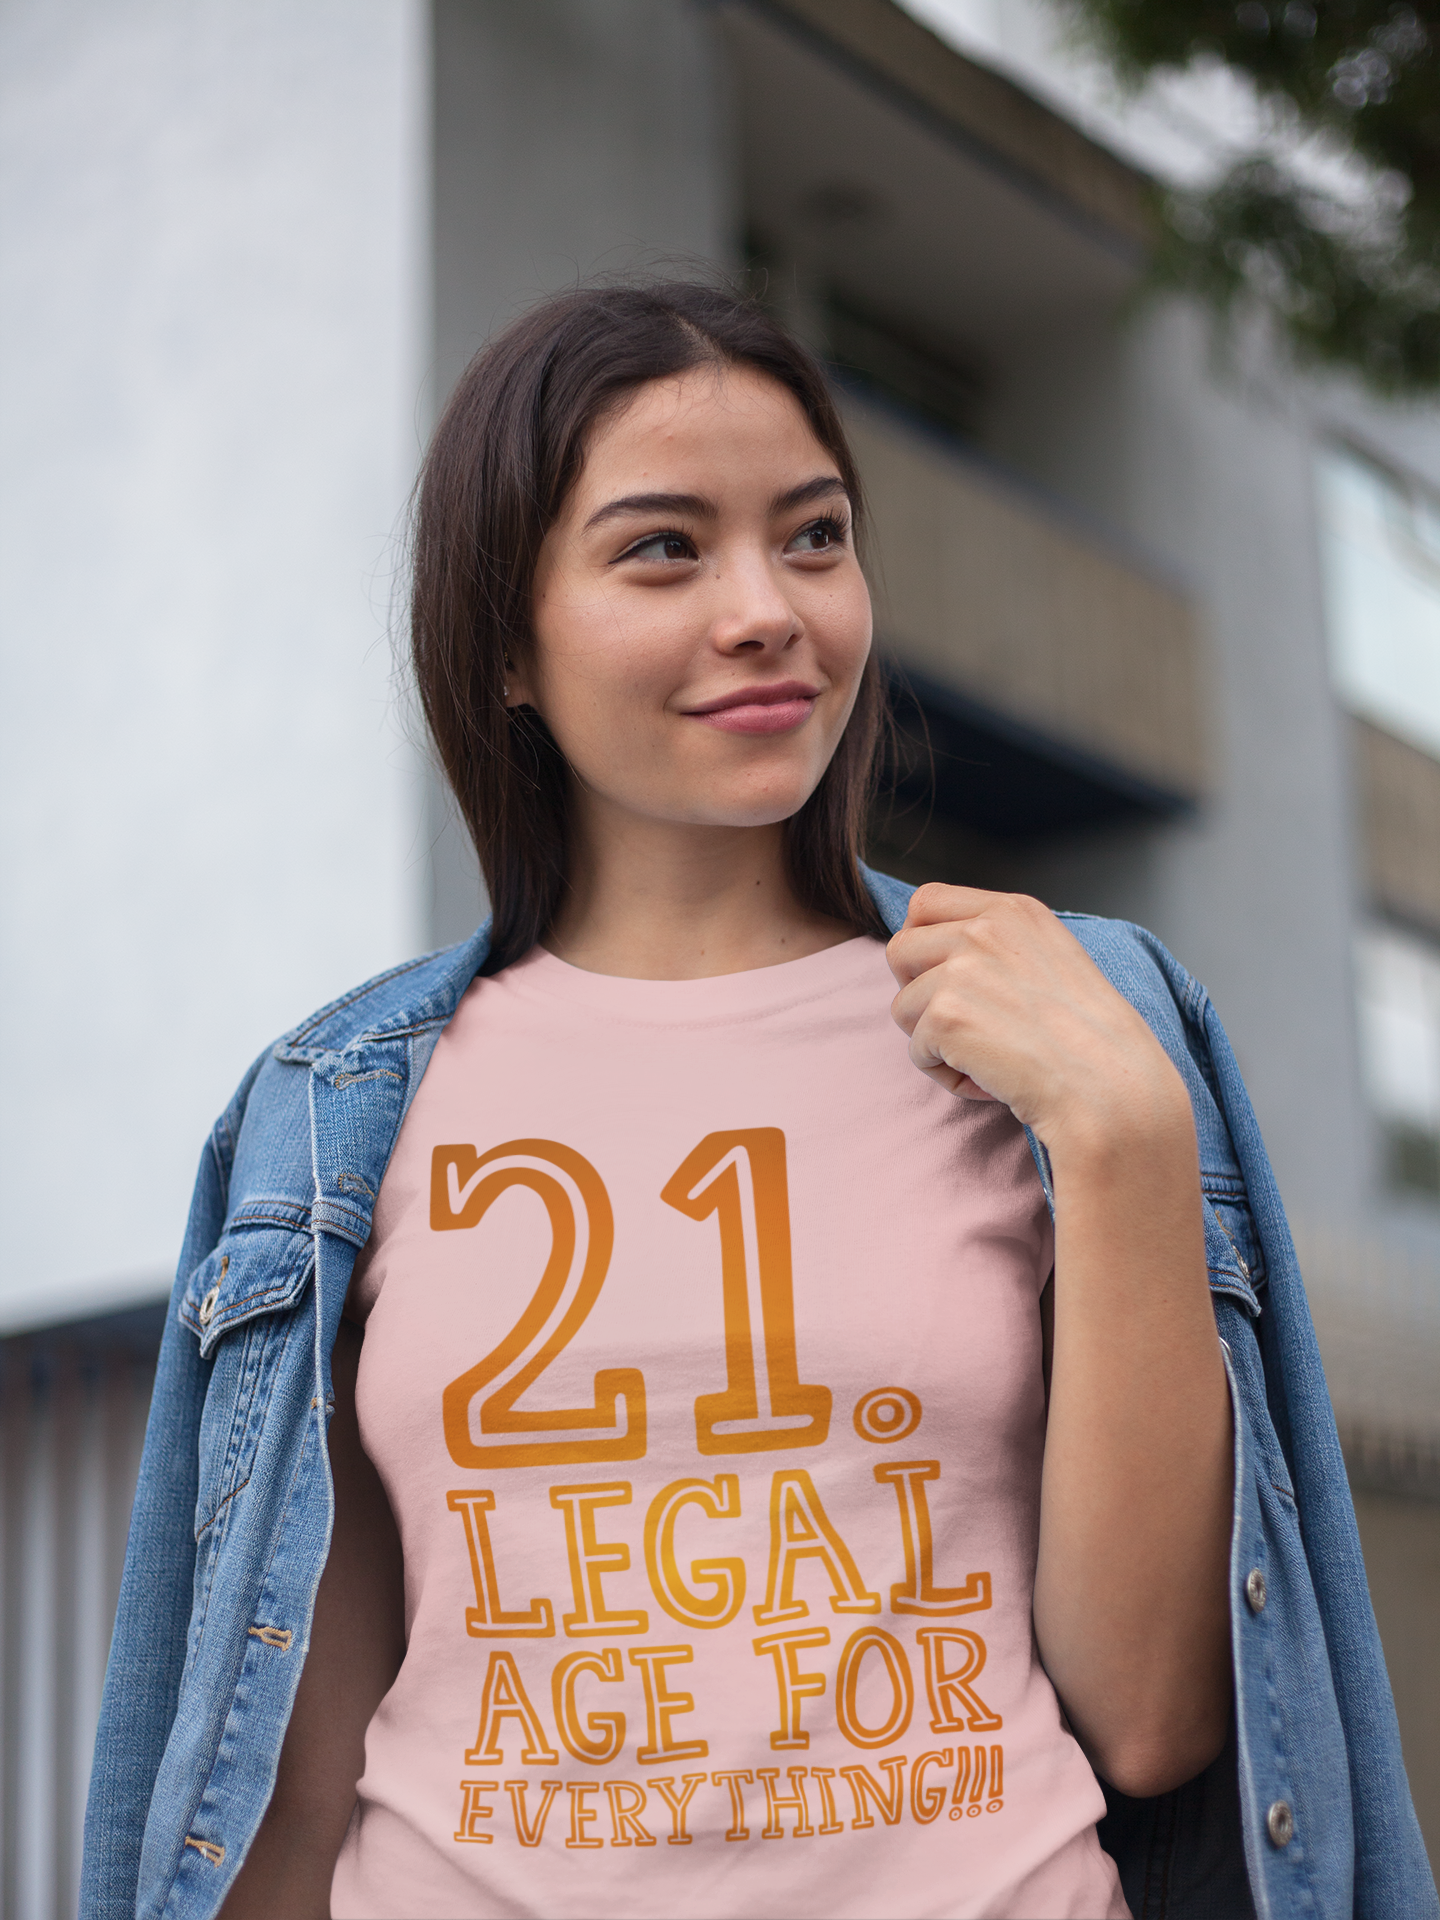 21, Legal Age for Everything, Unisexshirt, Motivational Shirt, Inspirational Shirt, Positive Shirts, Gift Ideas for Women, Gift Ideas for Men